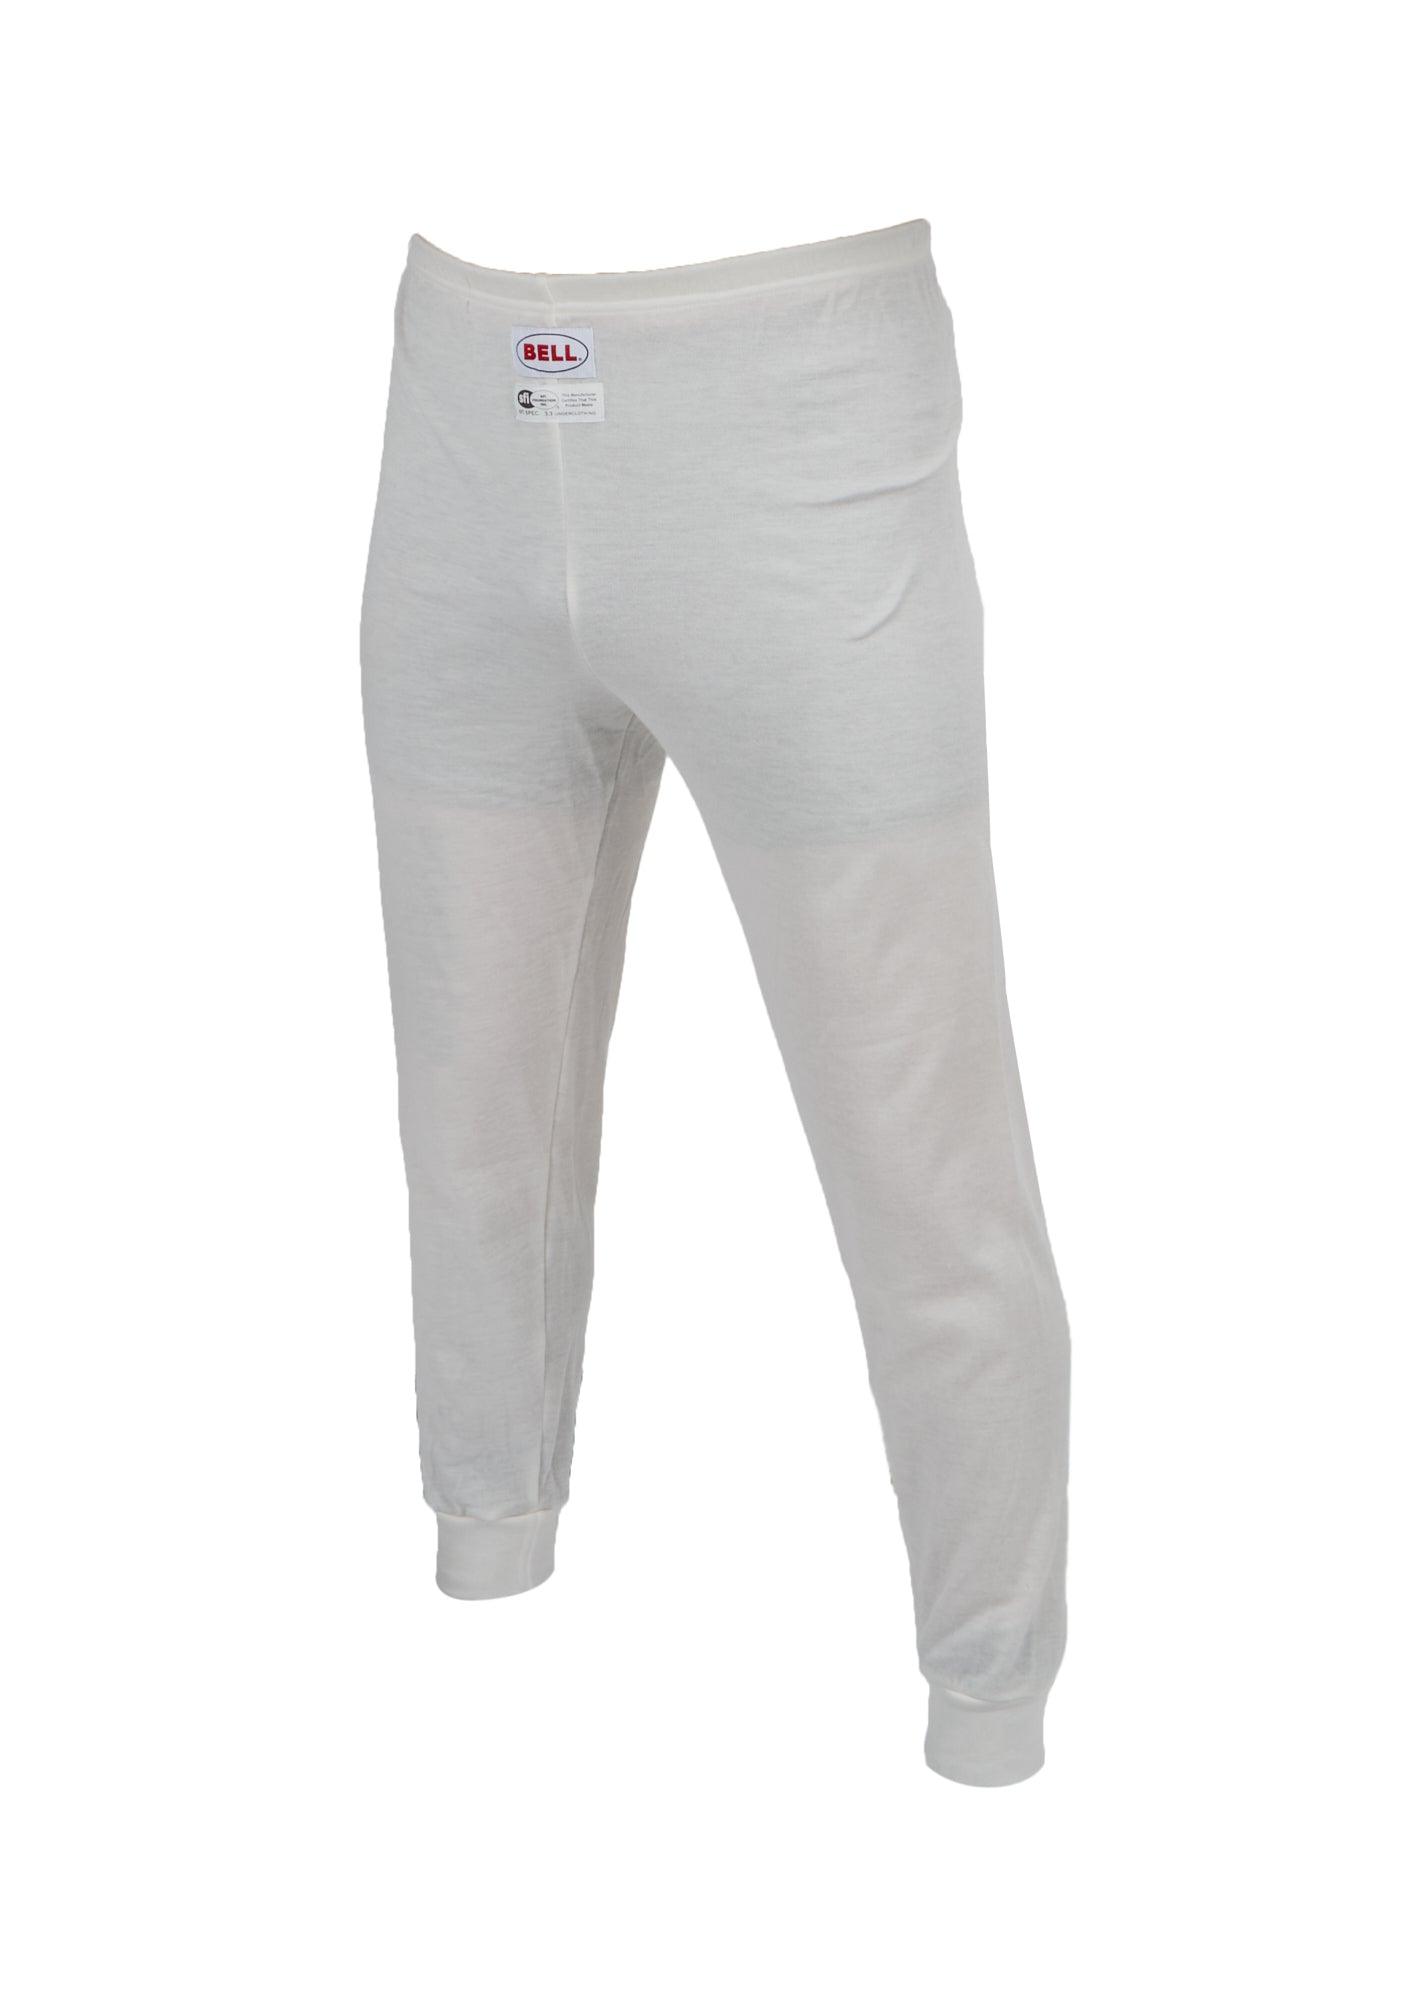 Underwear Bottom SPORT- TX White Lrg SFI 3.3/5 - Burlile Performance Products